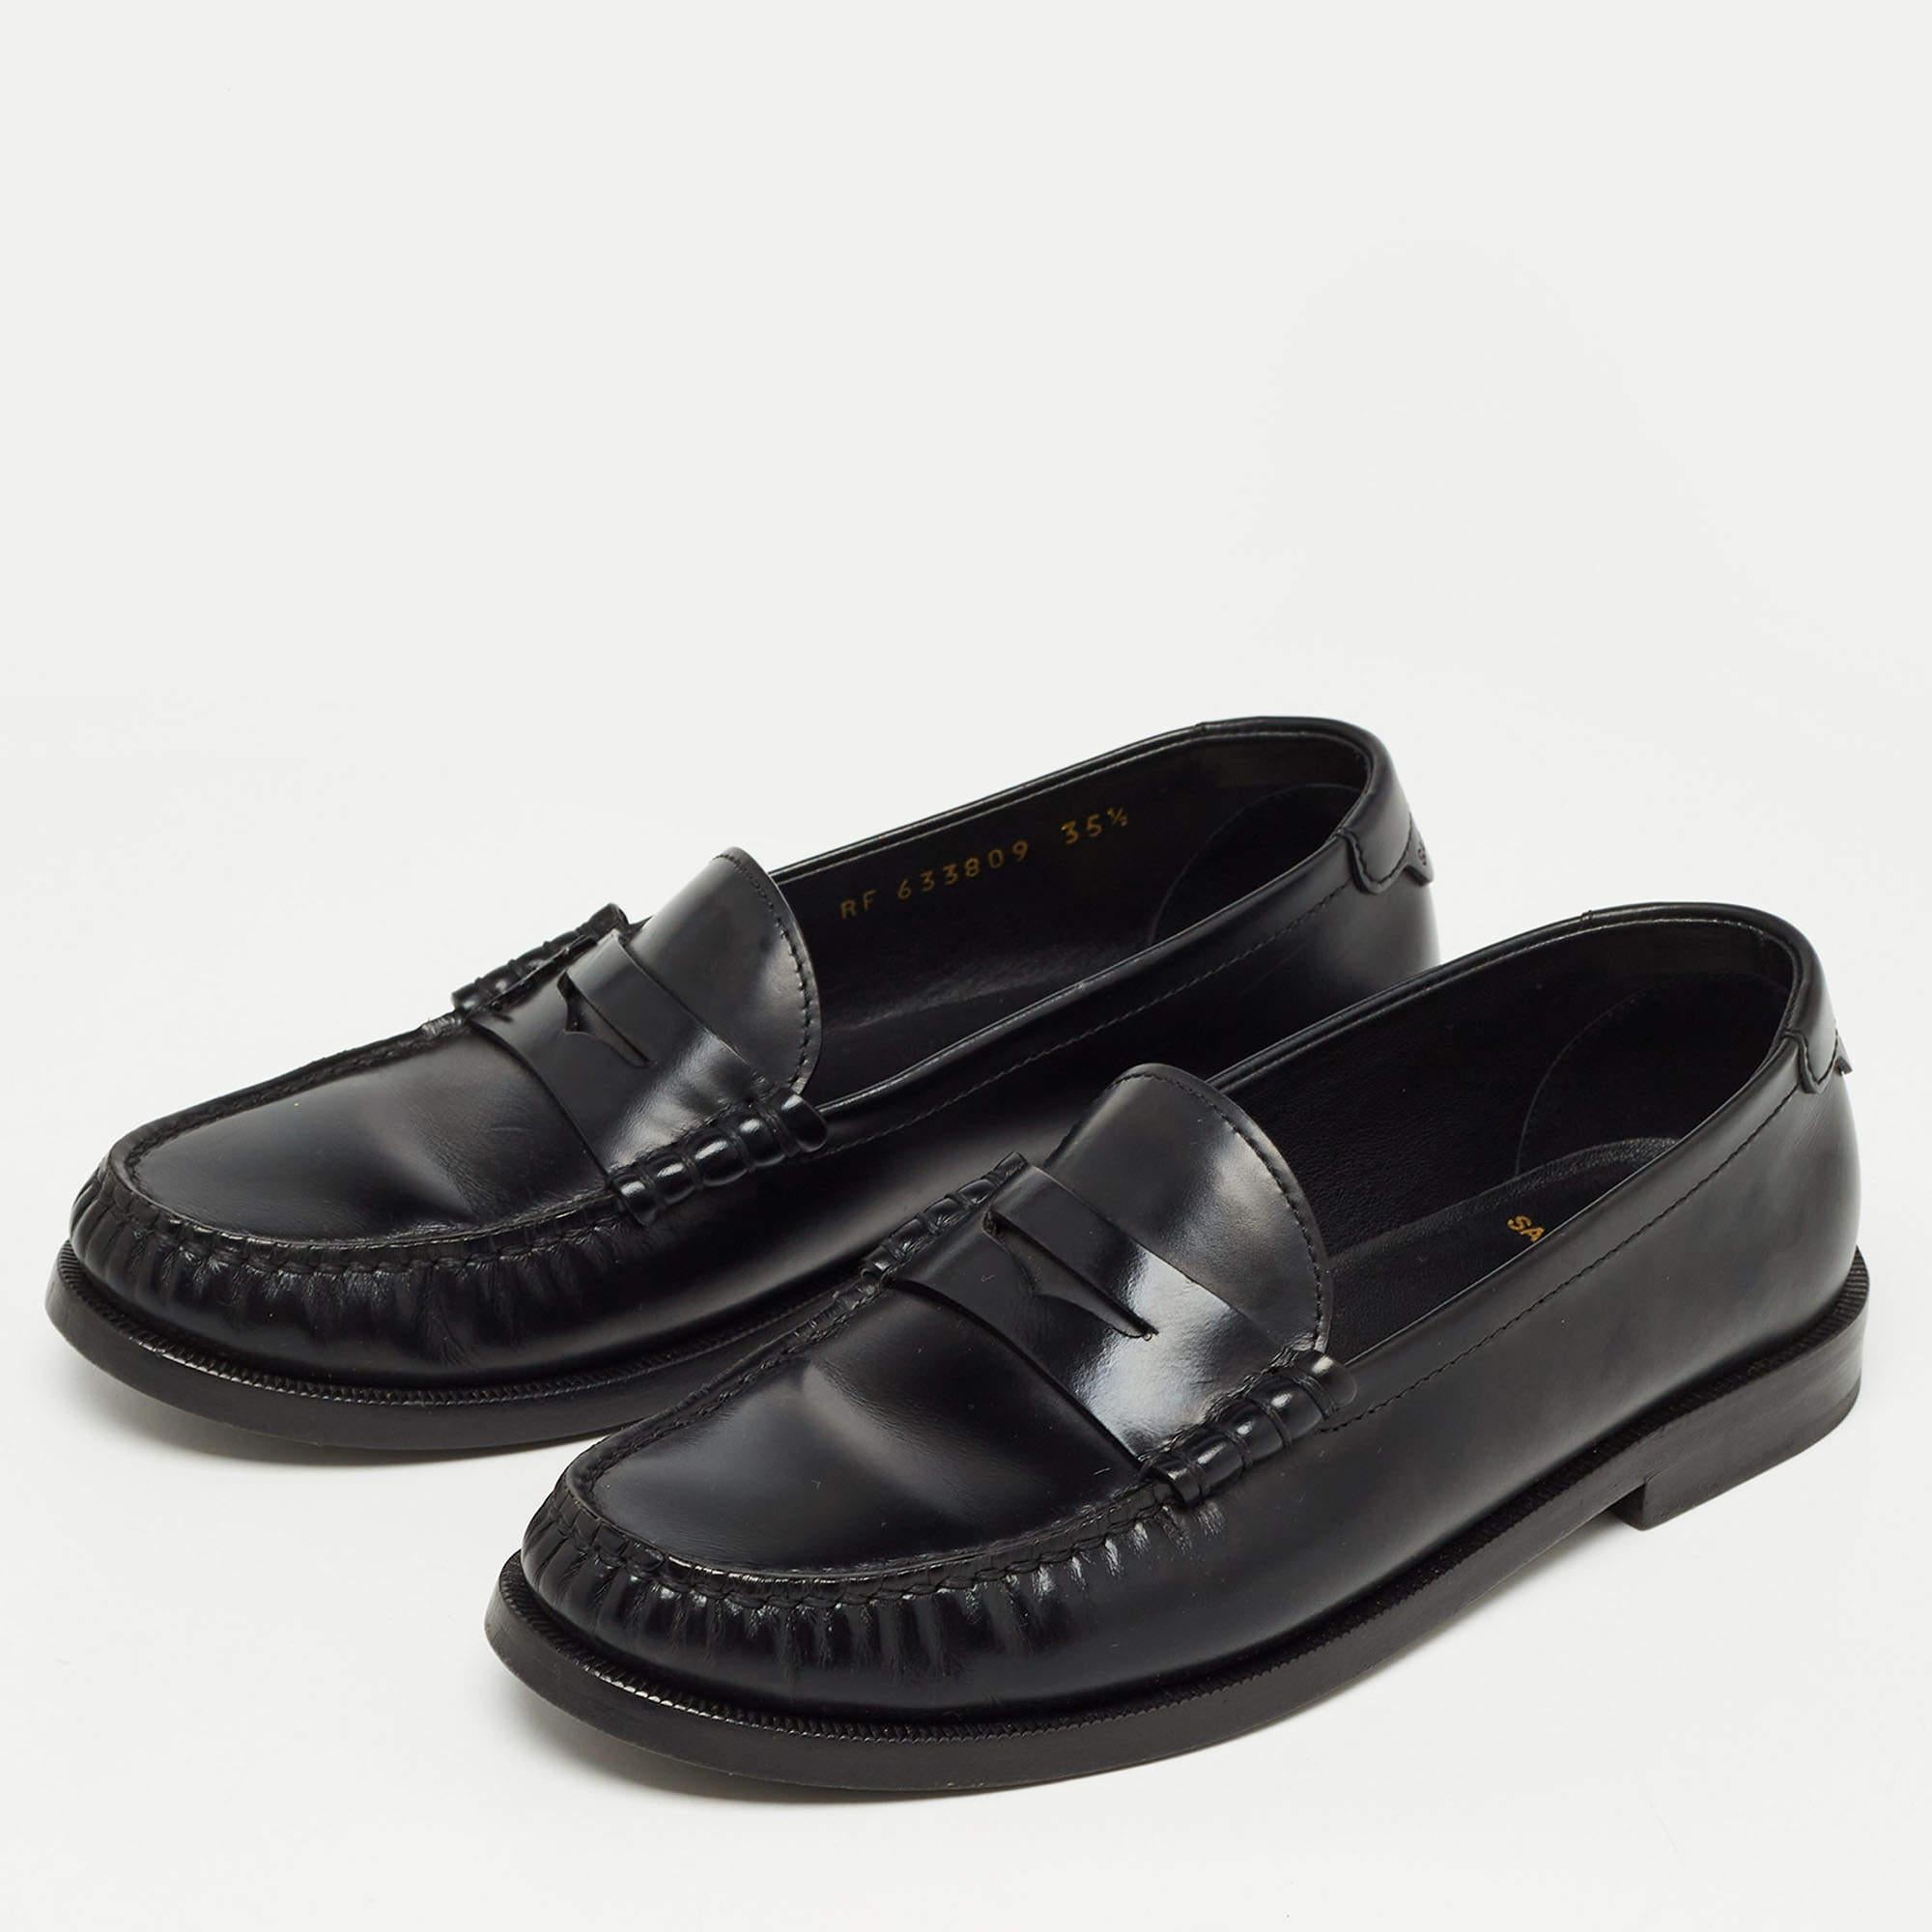 Saint Laurent Black Leather Slip On Loafers Size 35.5 For Sale 3